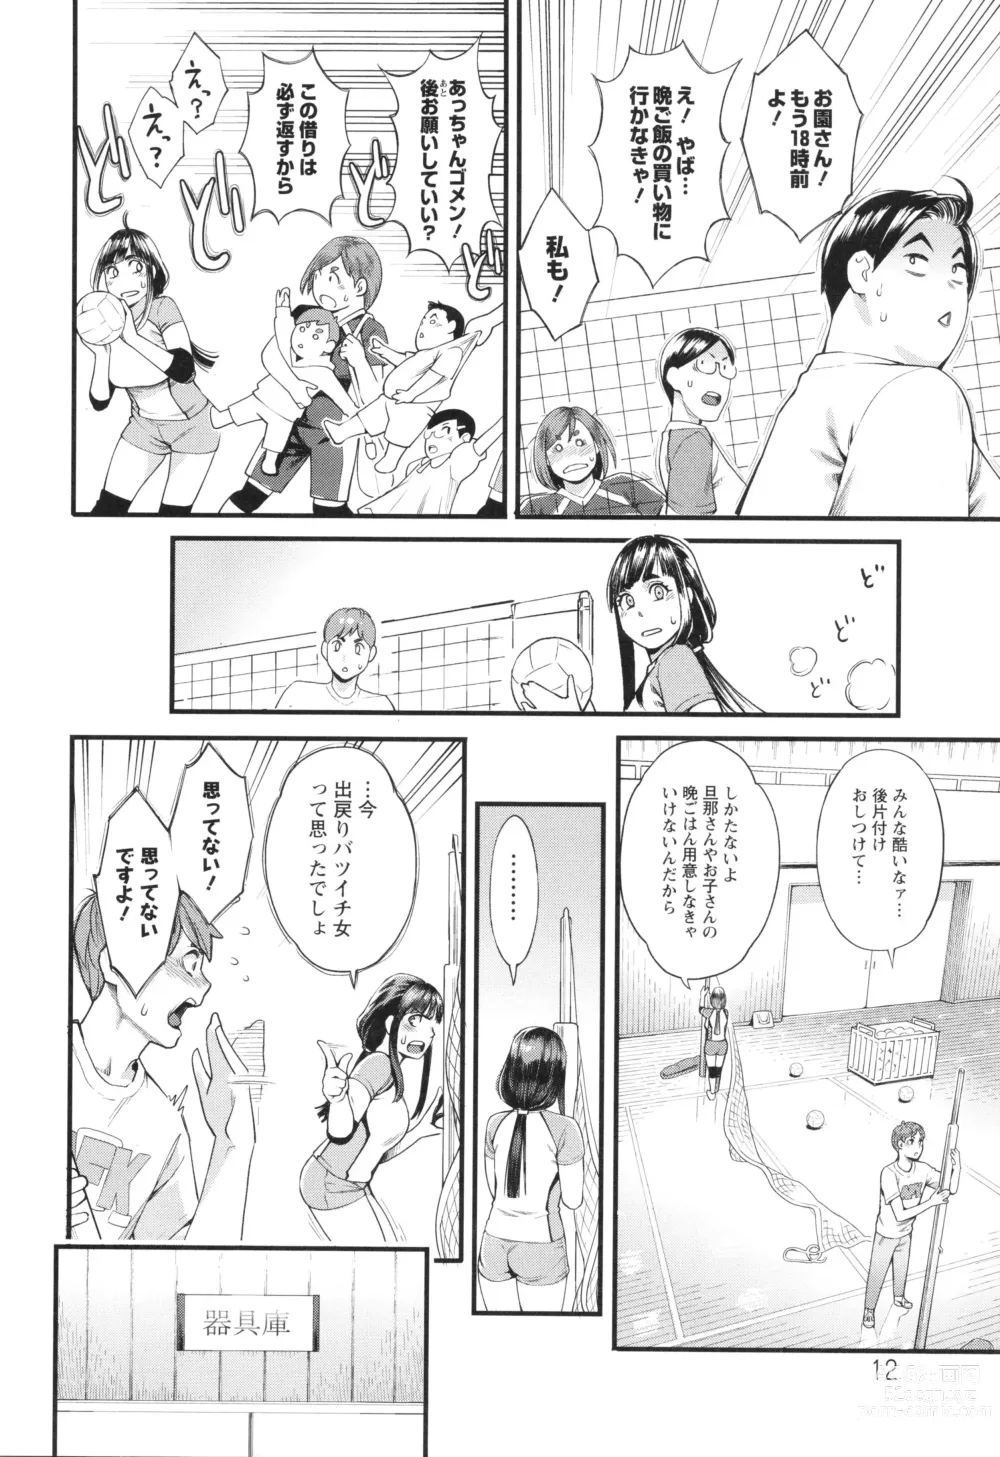 Page 13 of manga Hoshigaoka Star Volley